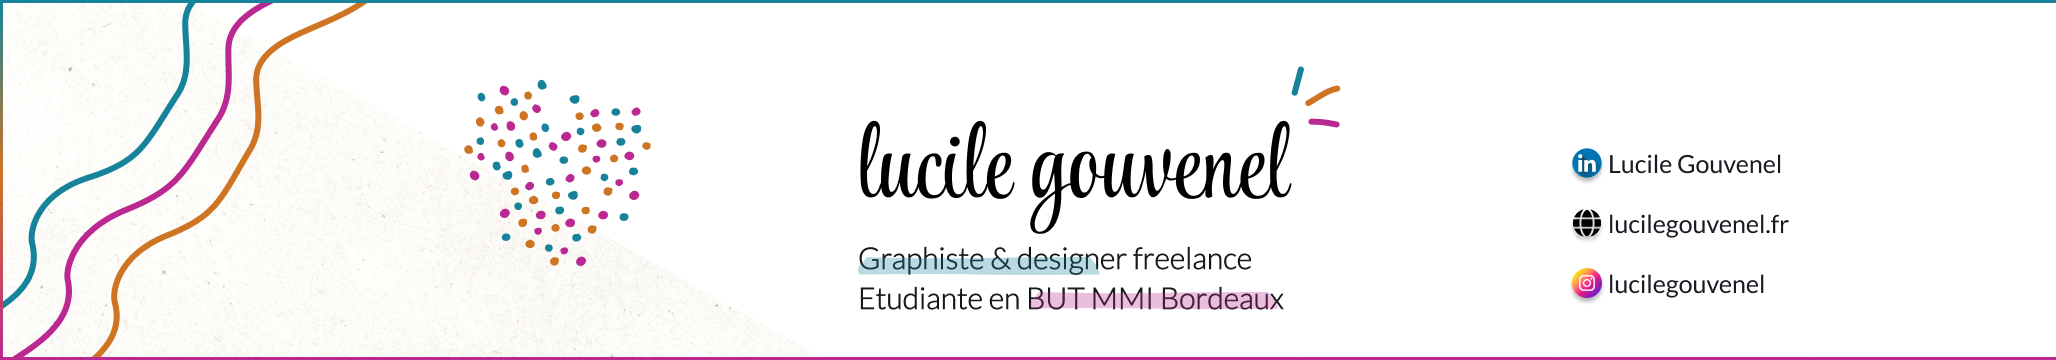 Banner profilu uživatele Lucile Gouvenel